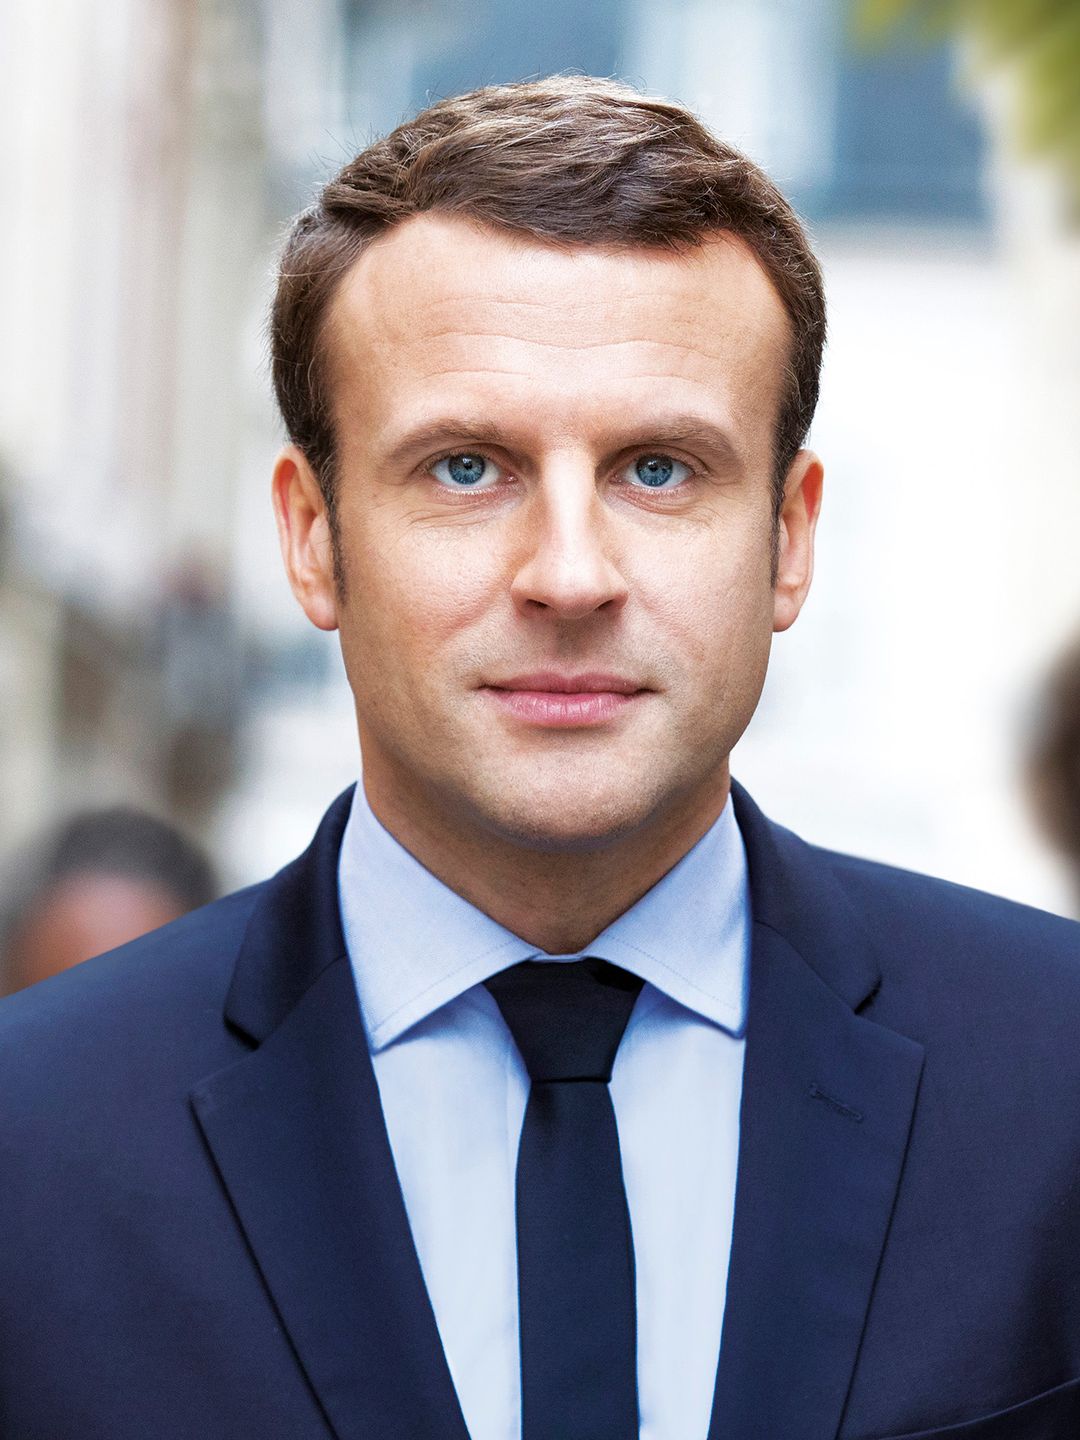 Emmanuel Macron does he have a wife